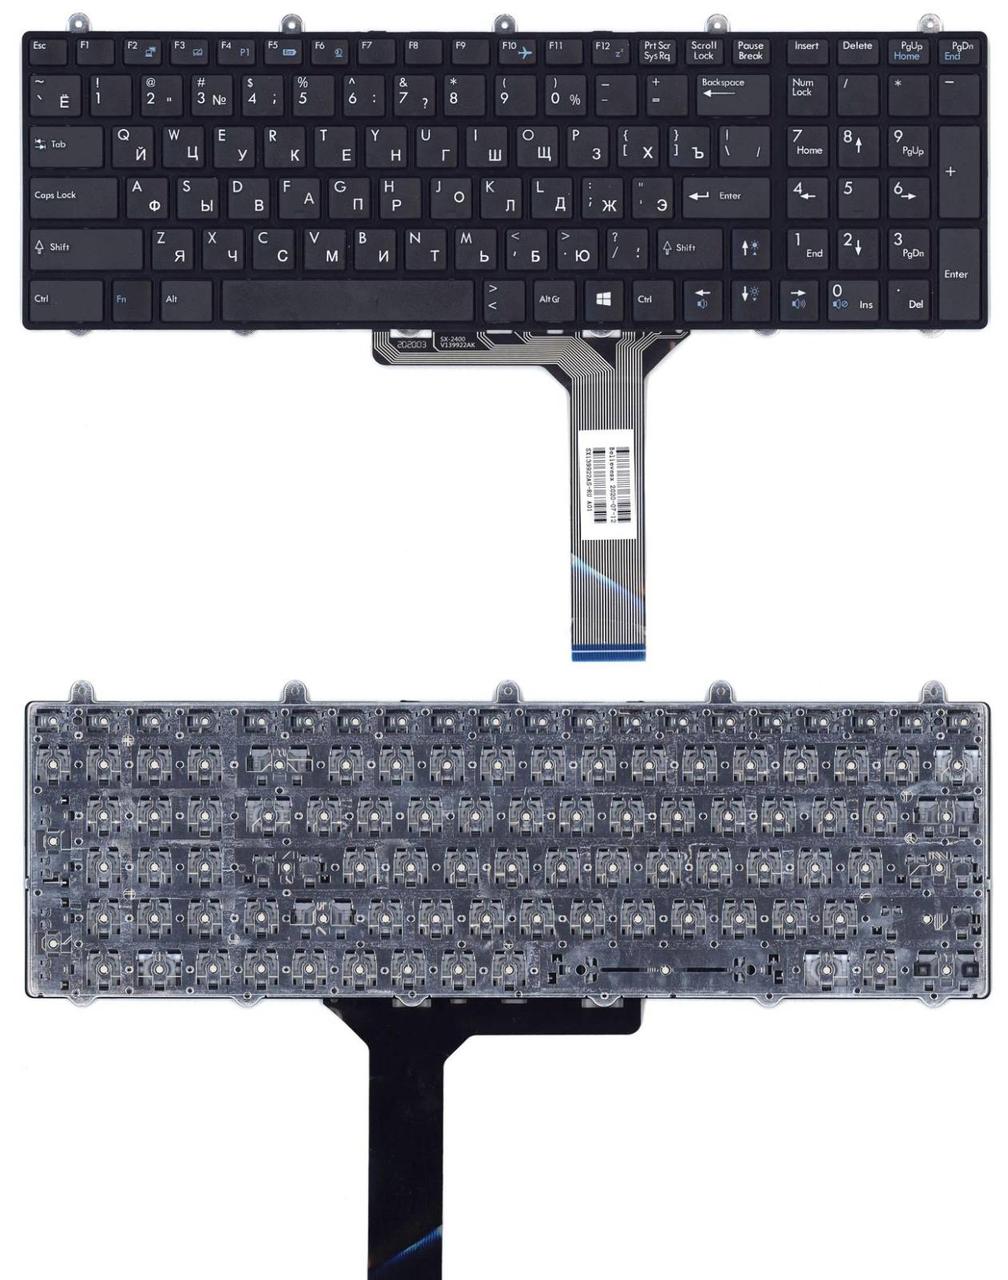 Клавиатура для ноутбука MSI 7RE черная